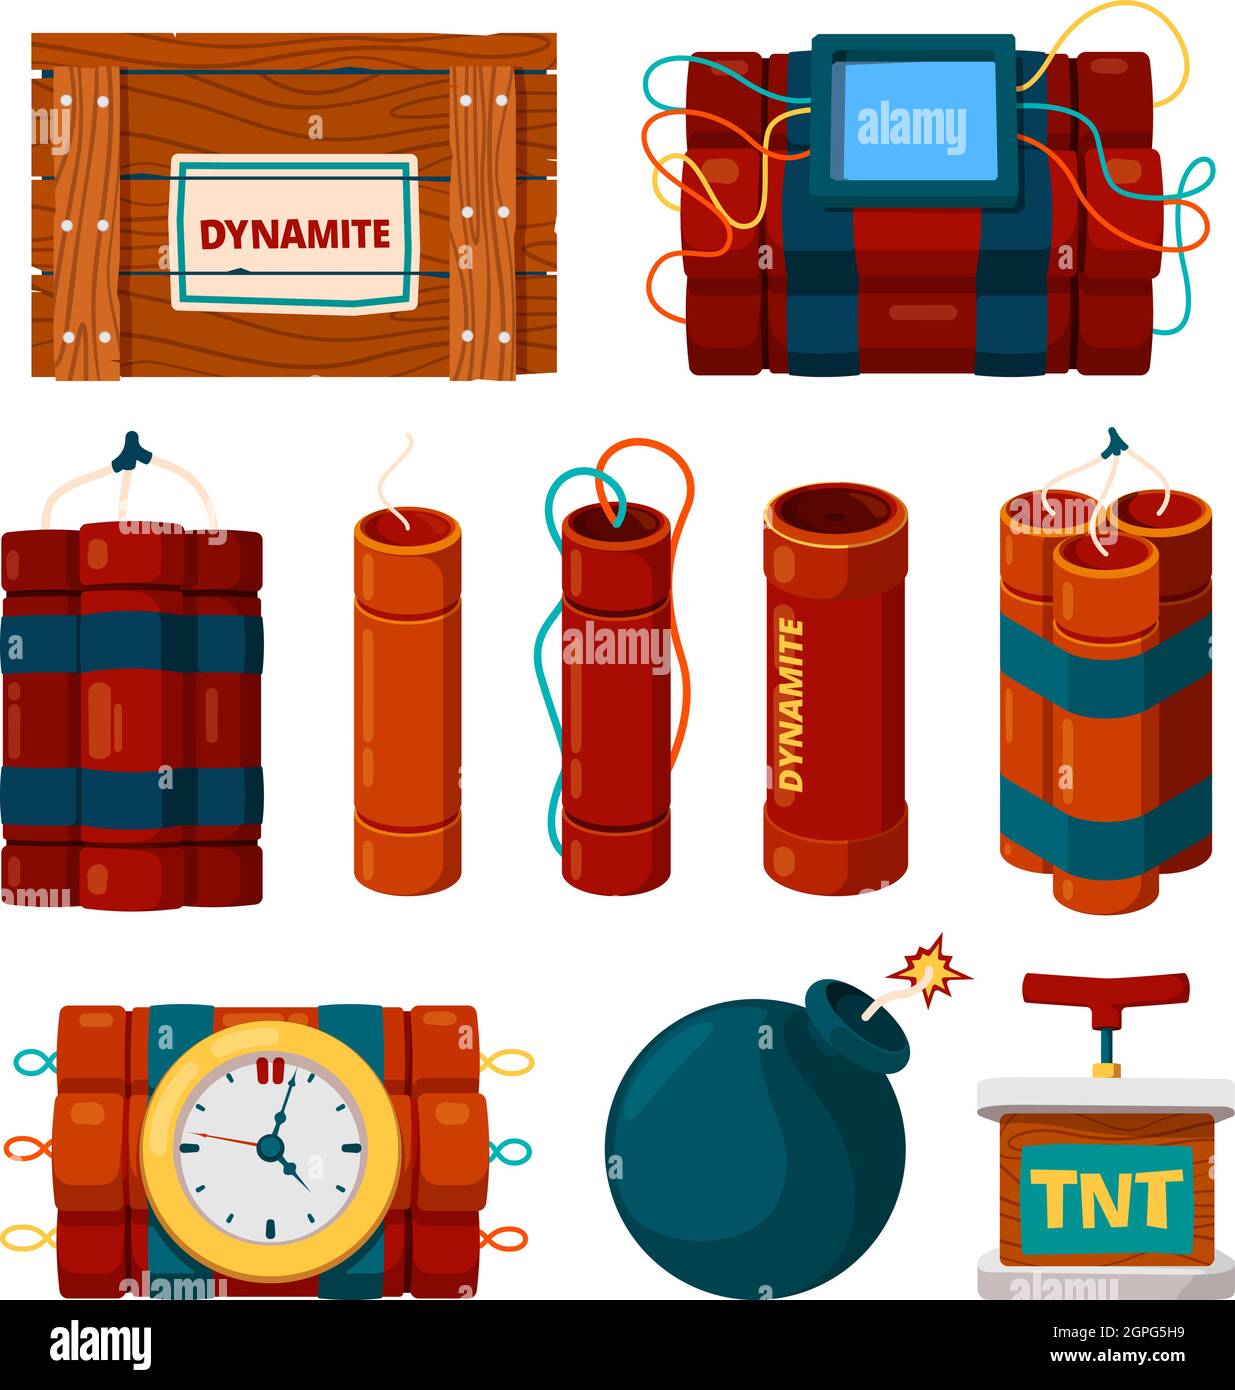 Dynamite sticks. Risk dangerous items bomb with clock alarm and timer detonator explosion burn vector cartoon pictures set Stock Vector